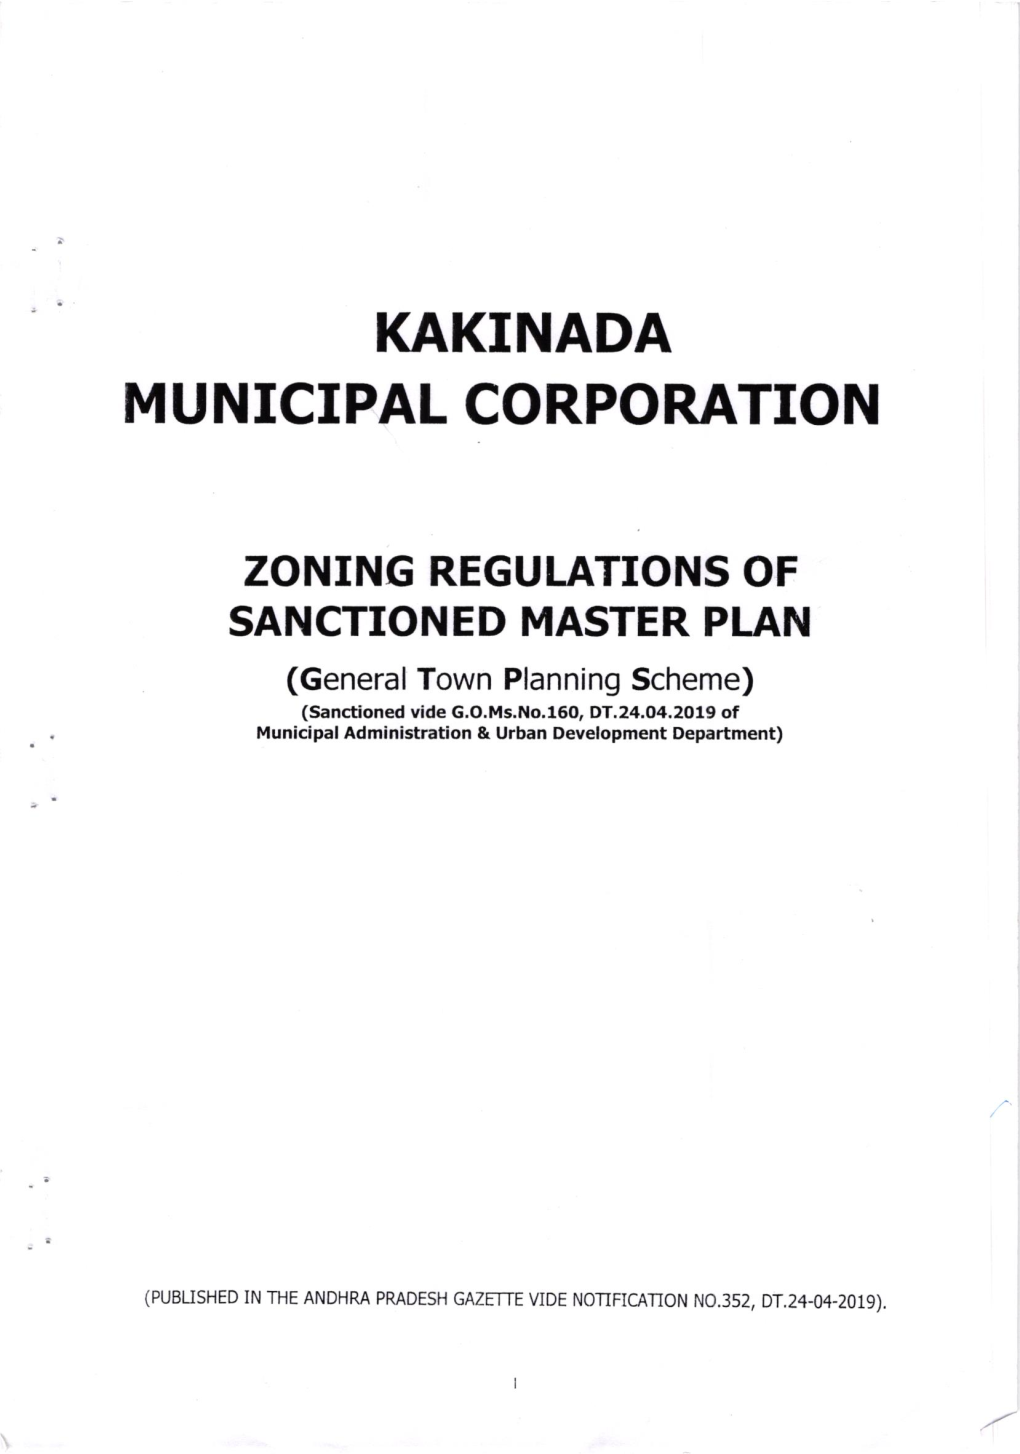 Kakinada Municipal Corporation